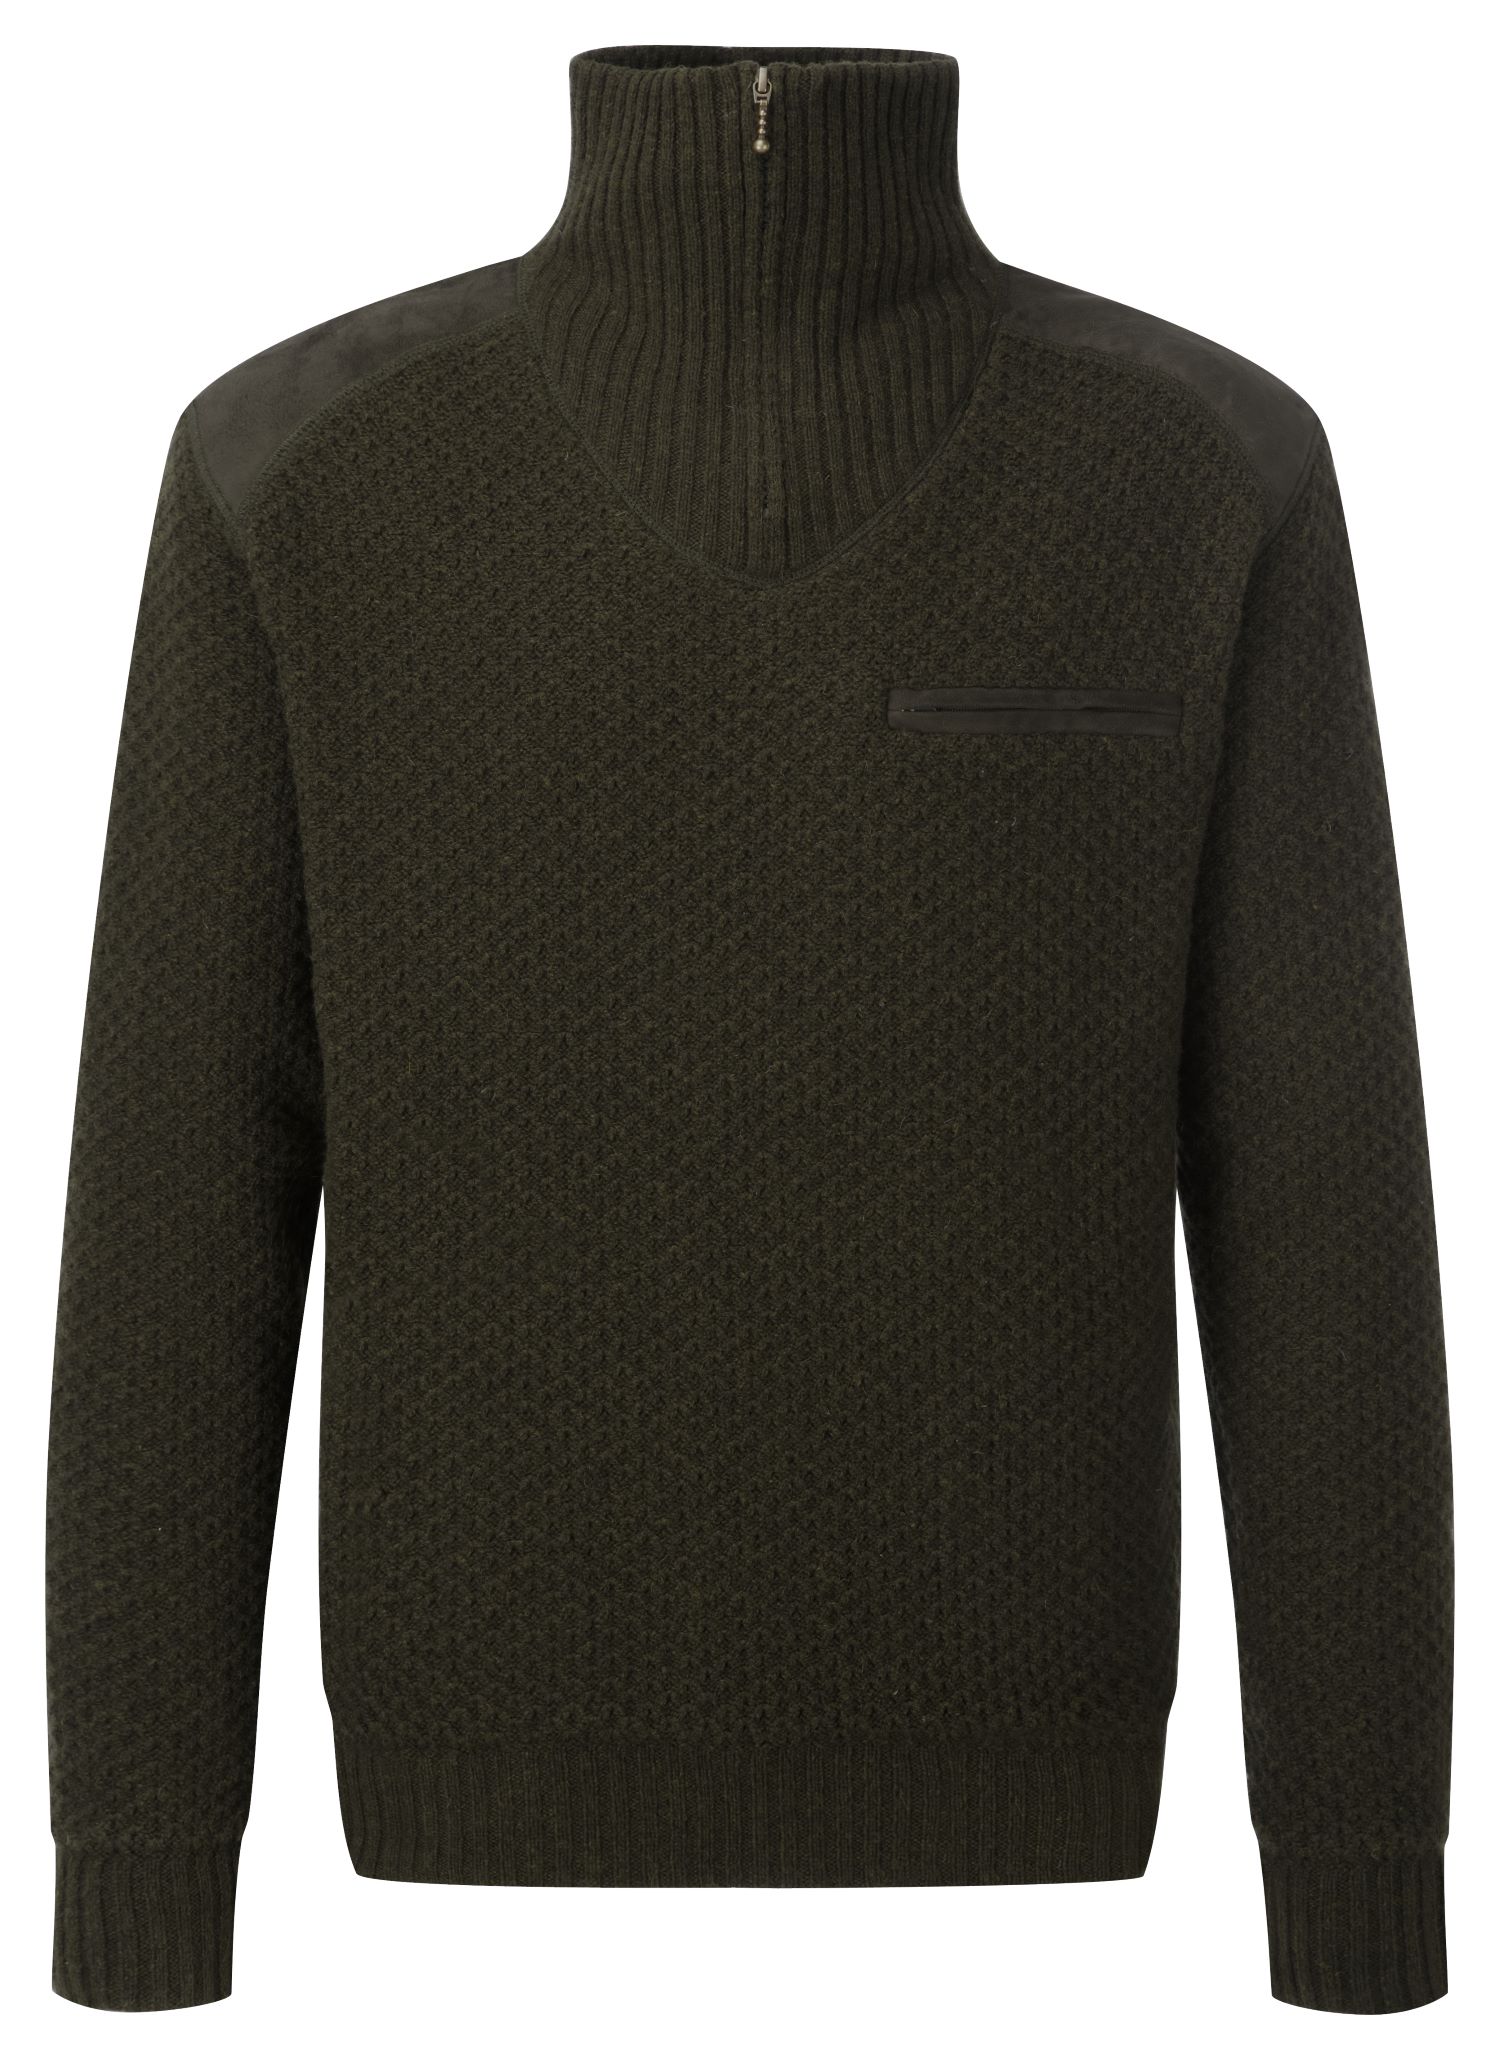 ShooterKing Men's Highland Jumper - Olive/Brown - Edinburgh Outdoor Wear